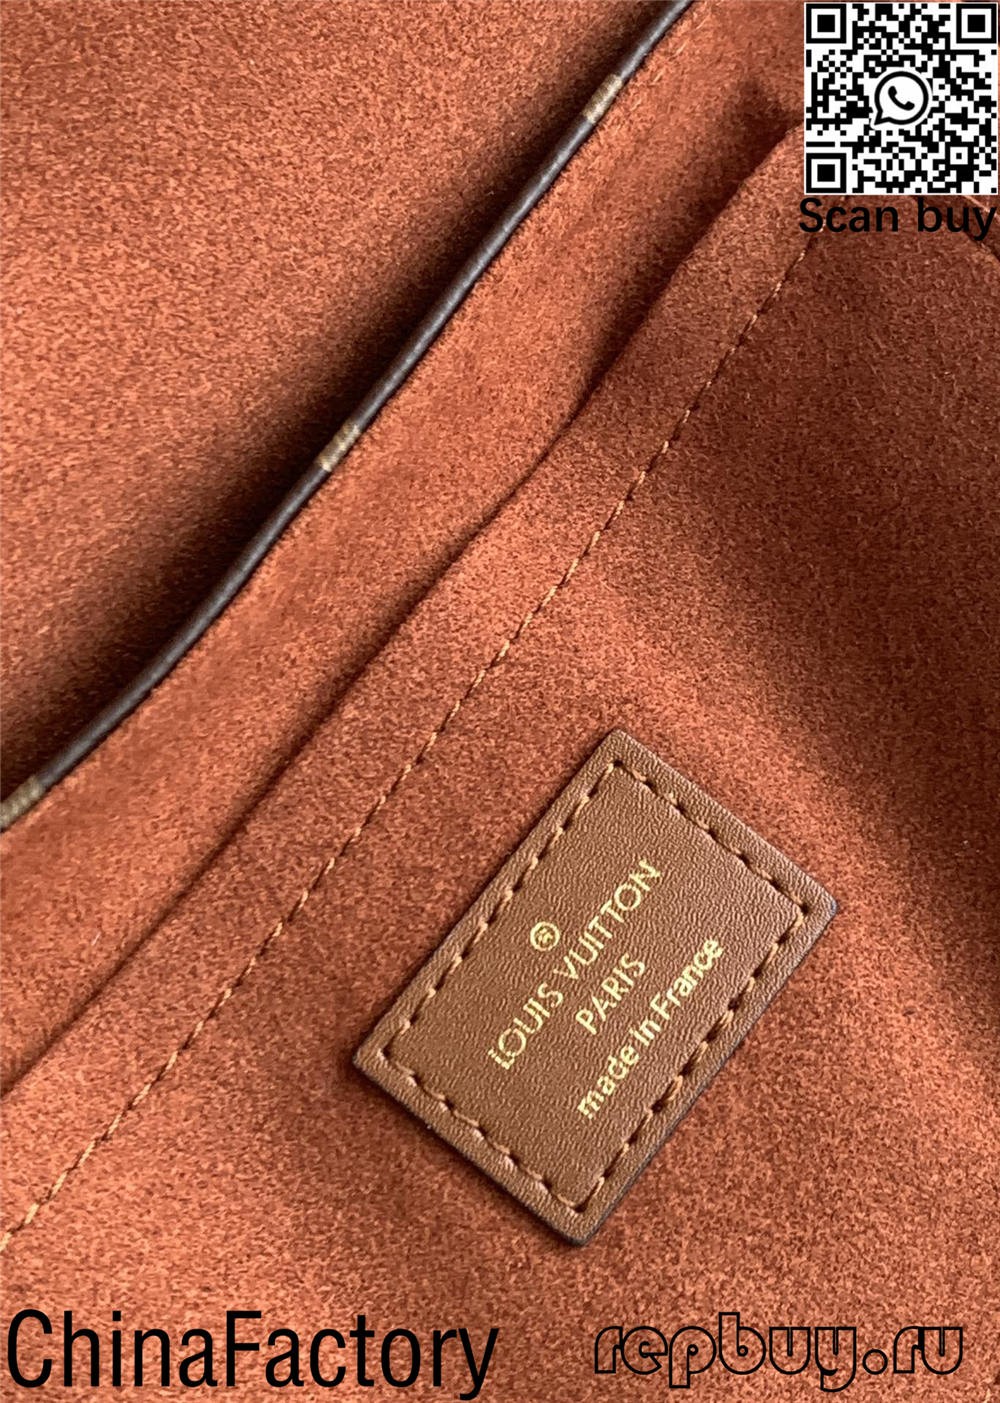 Louis Vuitton-ning sotib olish uchun eng yaxshi 12 ta eng sifatli replika sumkalari (2022 yil yangilangan)-Best Quality Fake Louis Vuitton Bag Online Store, Replica designer bag ru